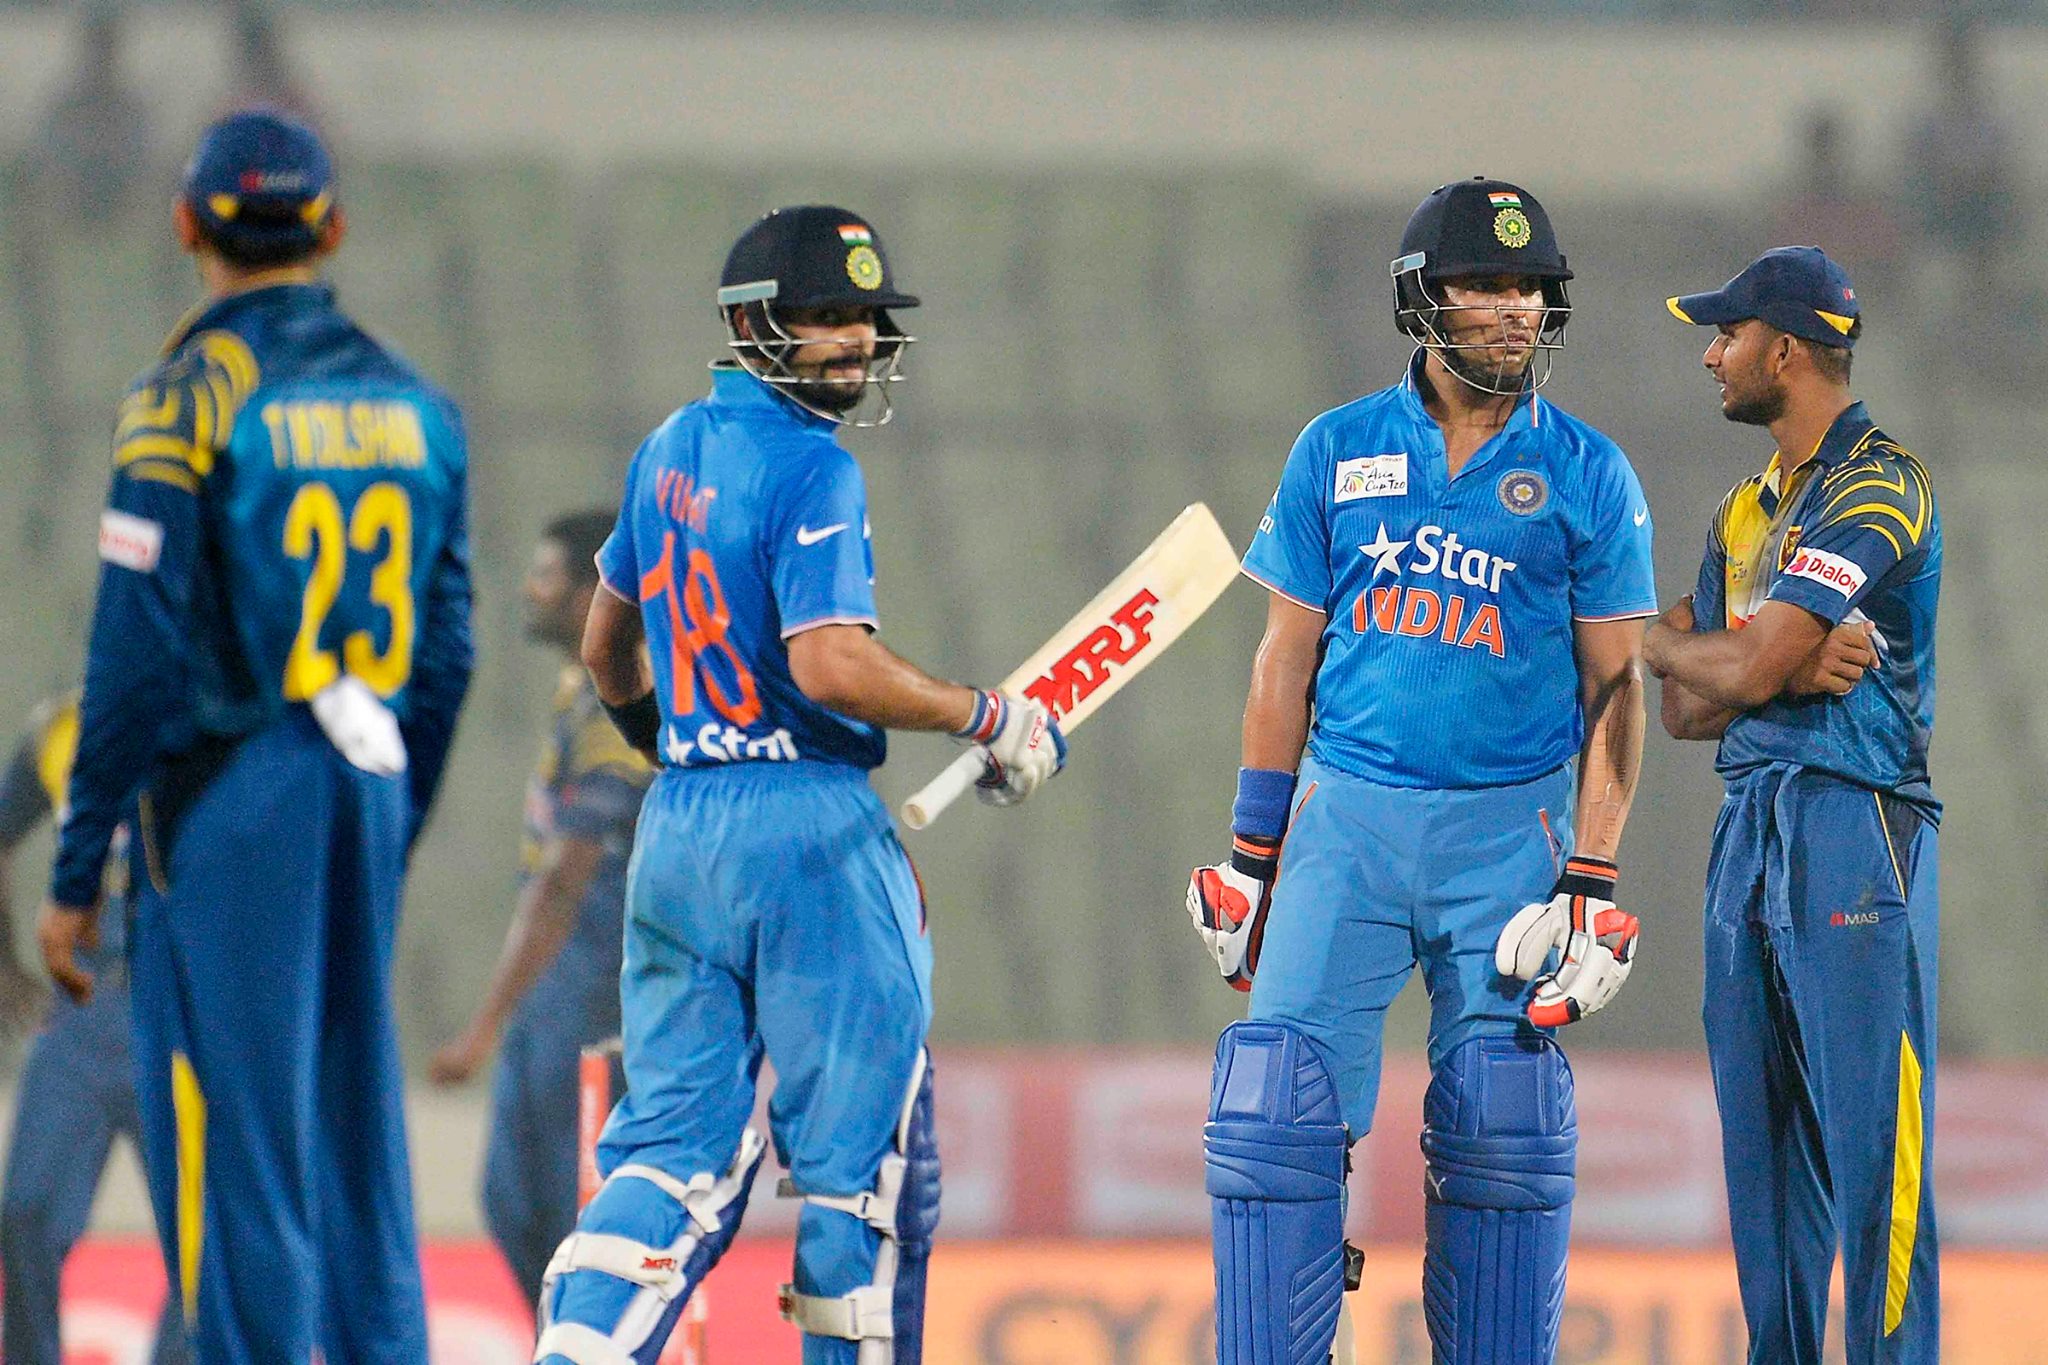 Sri Lankan batsmen can learn so much from the way Kohli is playing: Sangakkara